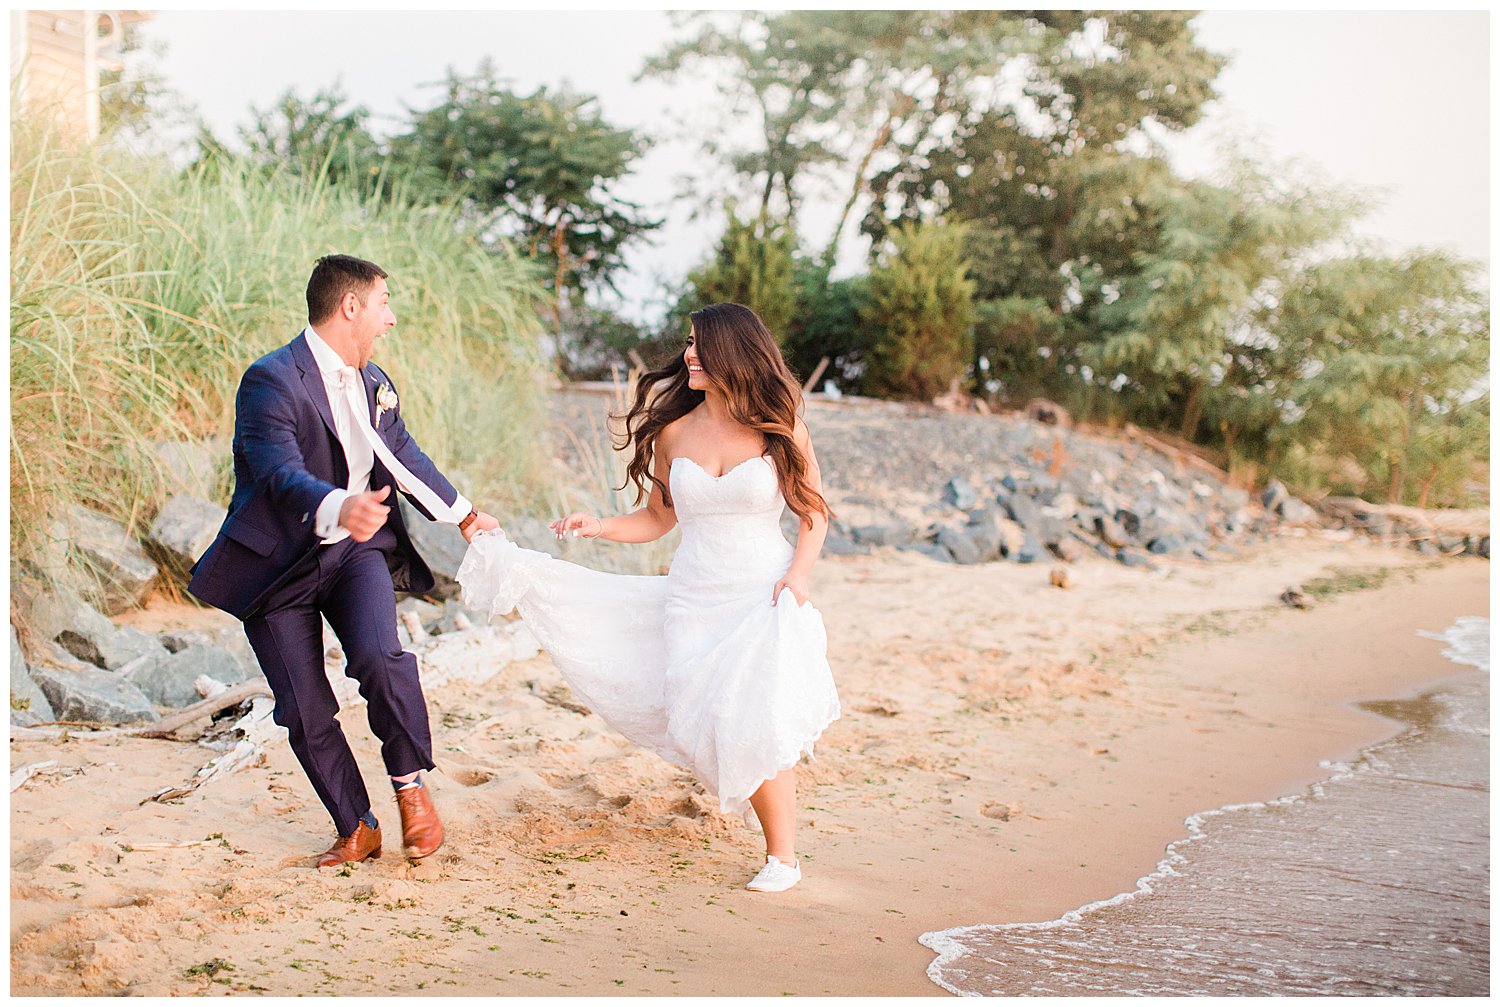 Bride and groom running on beach